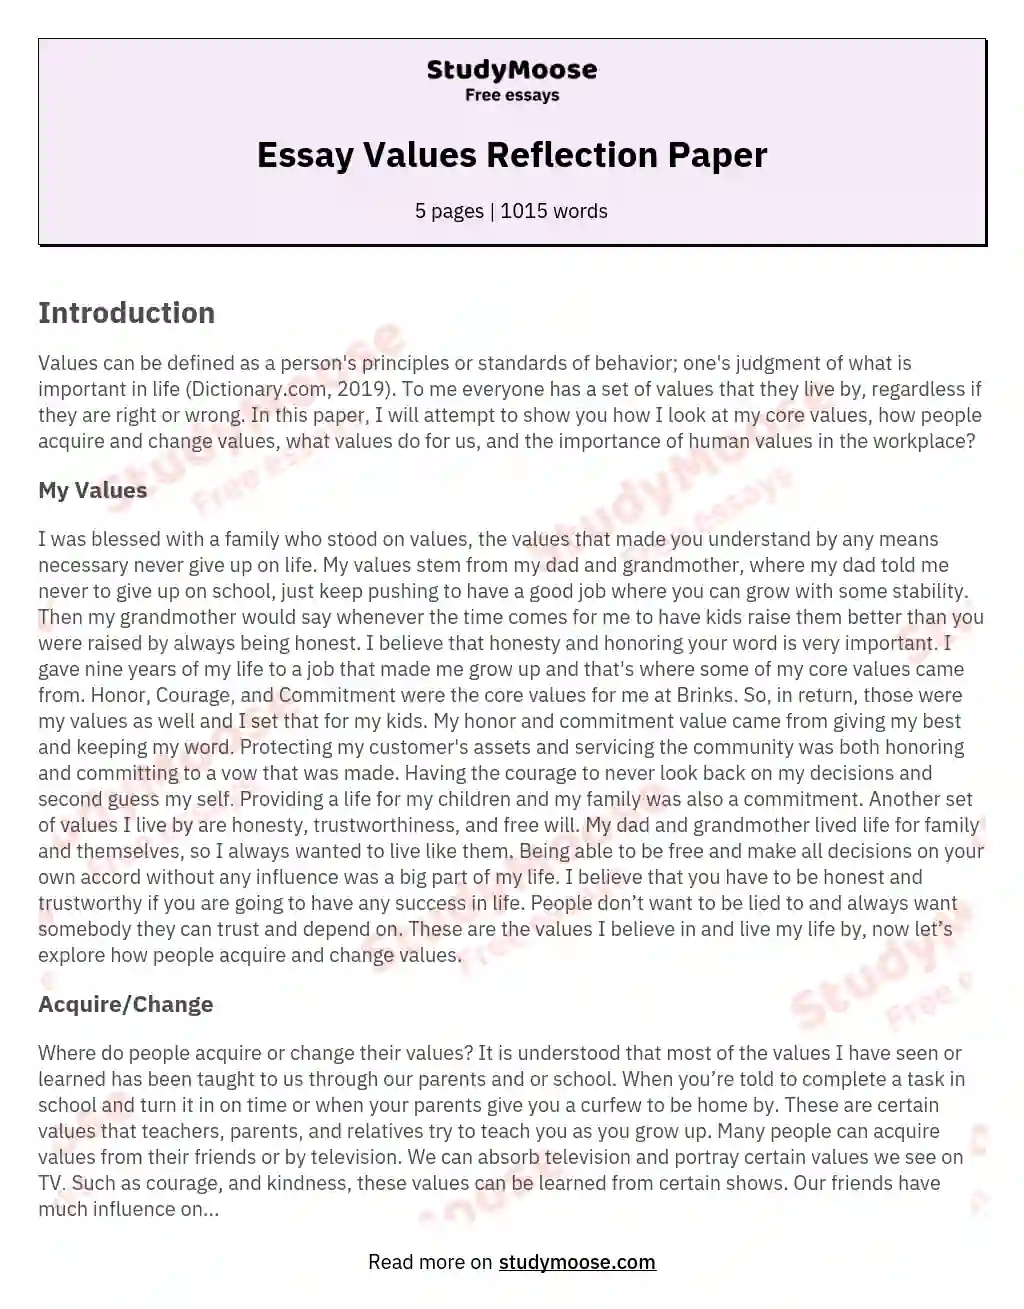 Essay Values Reflection Paper essay